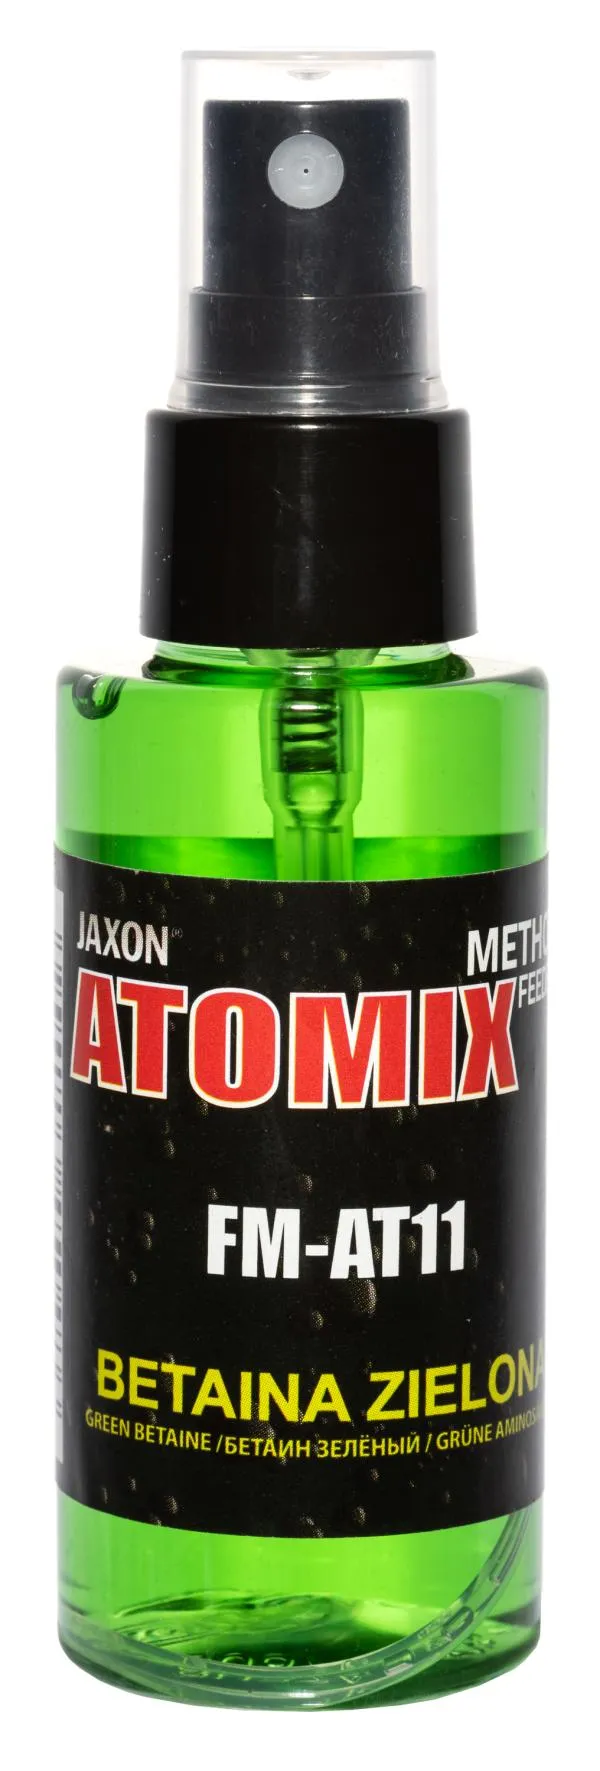 JAXON ATOMIX - GREEN BETAINE 50g aroma